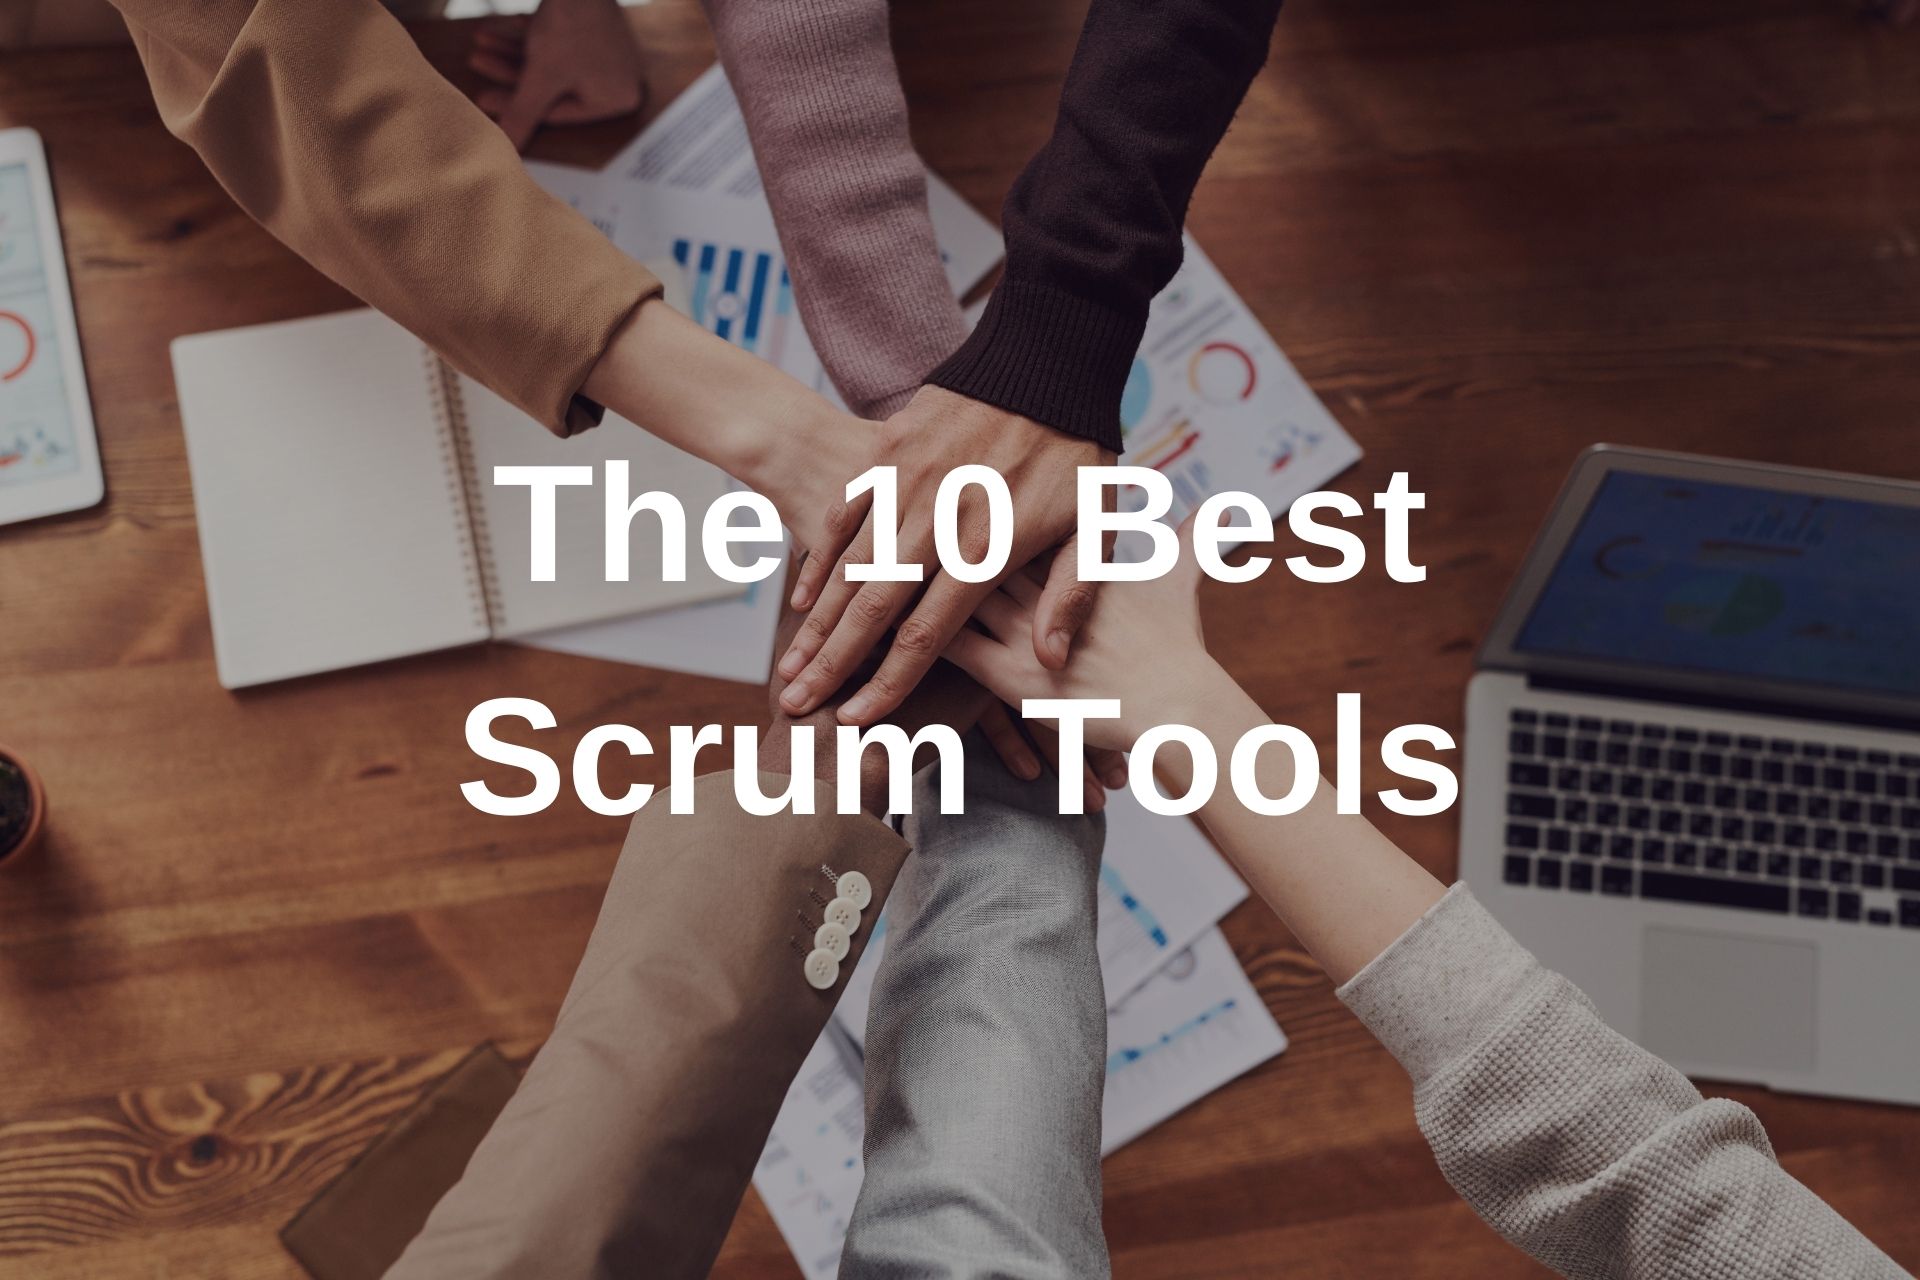 The 10 Best Scrum Tools